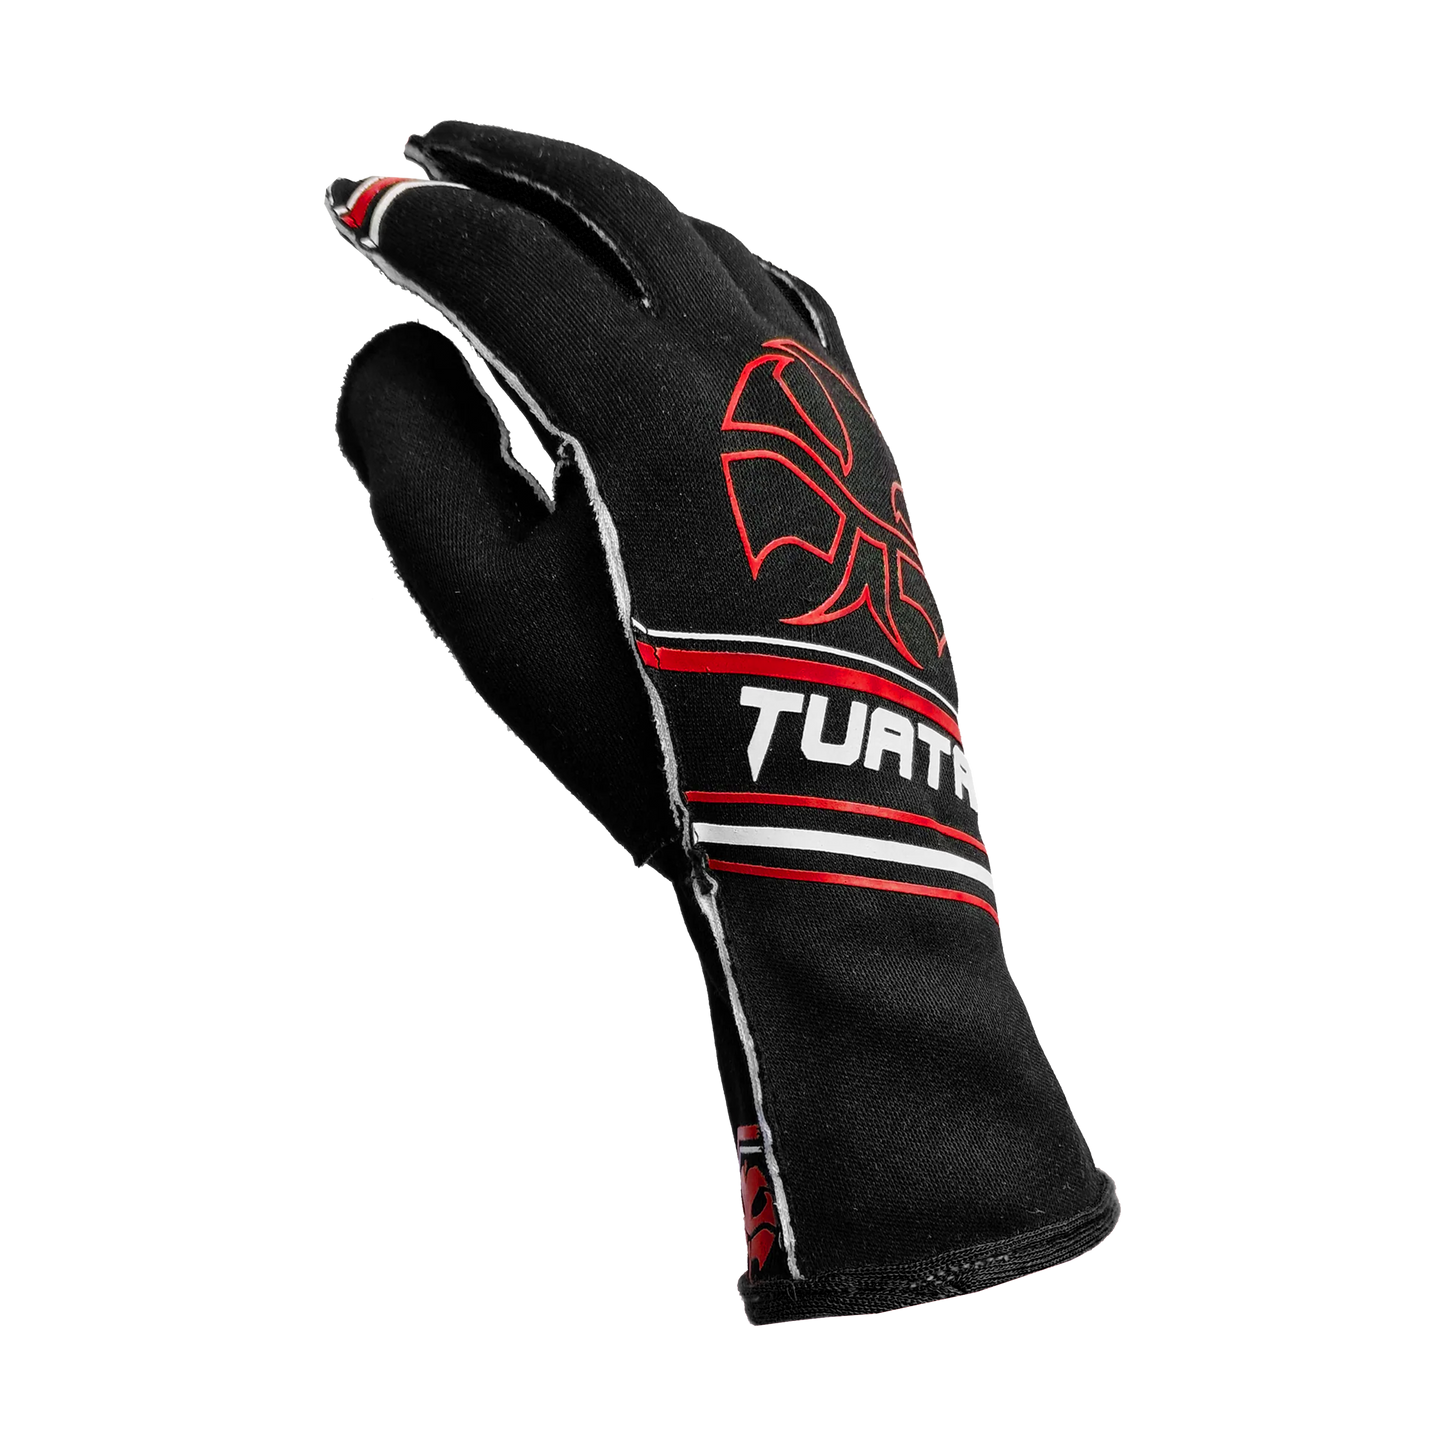 Ultimate Race gloves - Ultra Grip - DOMINATOR - BLK/RD